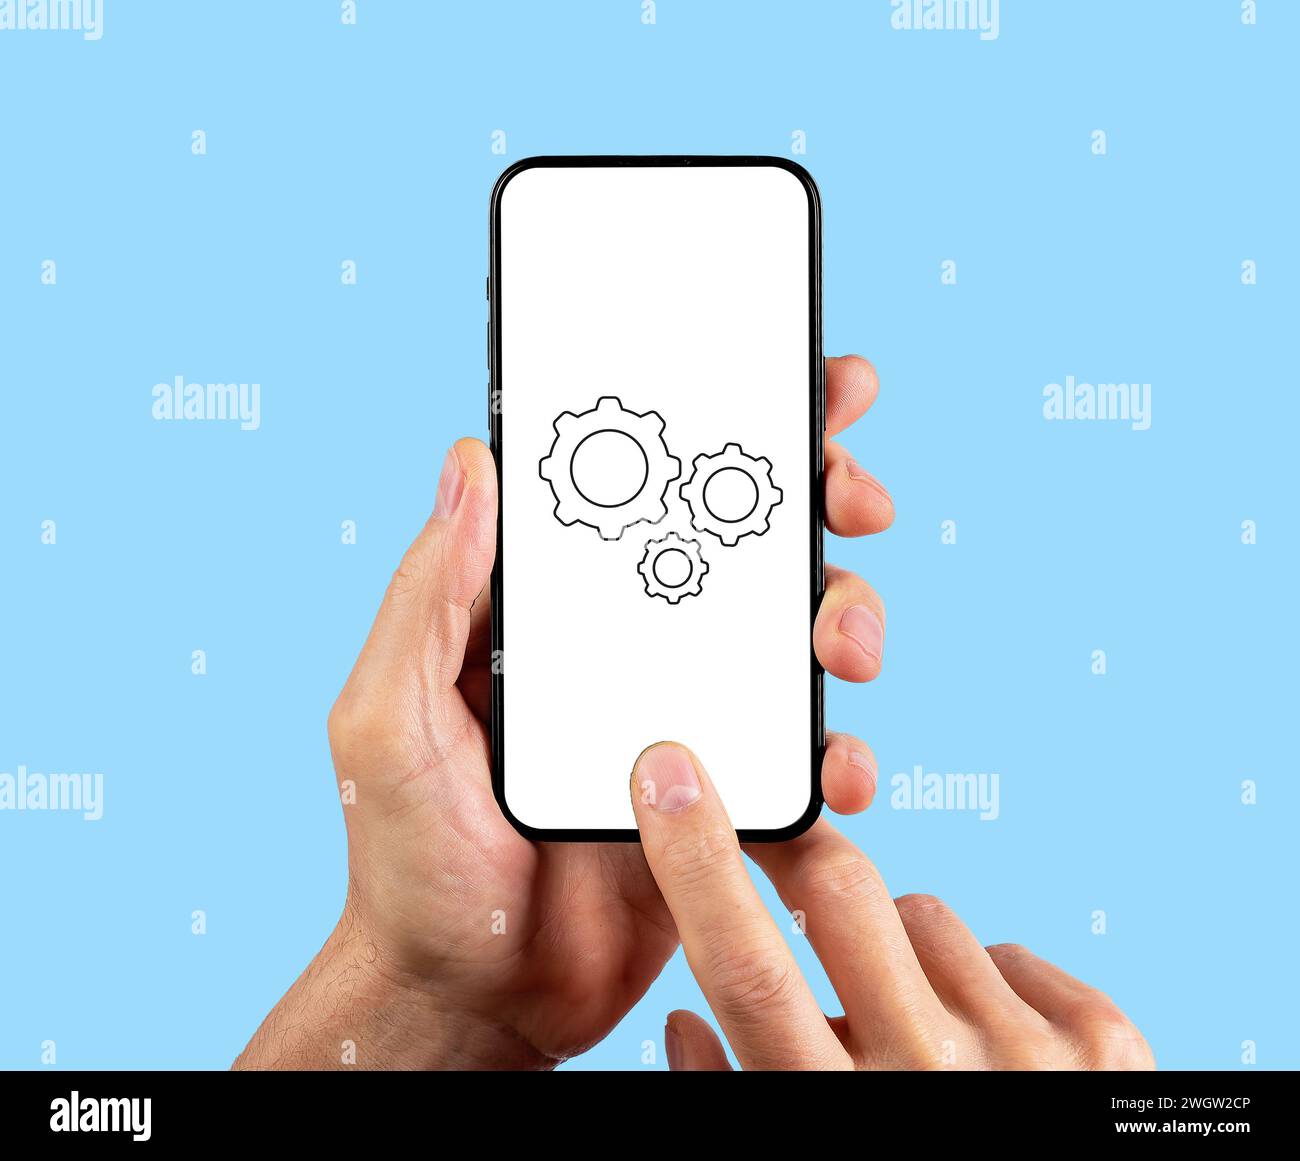 Adjusting mobile phone settings, smartphone cogwheel icon on screen Stock Photo